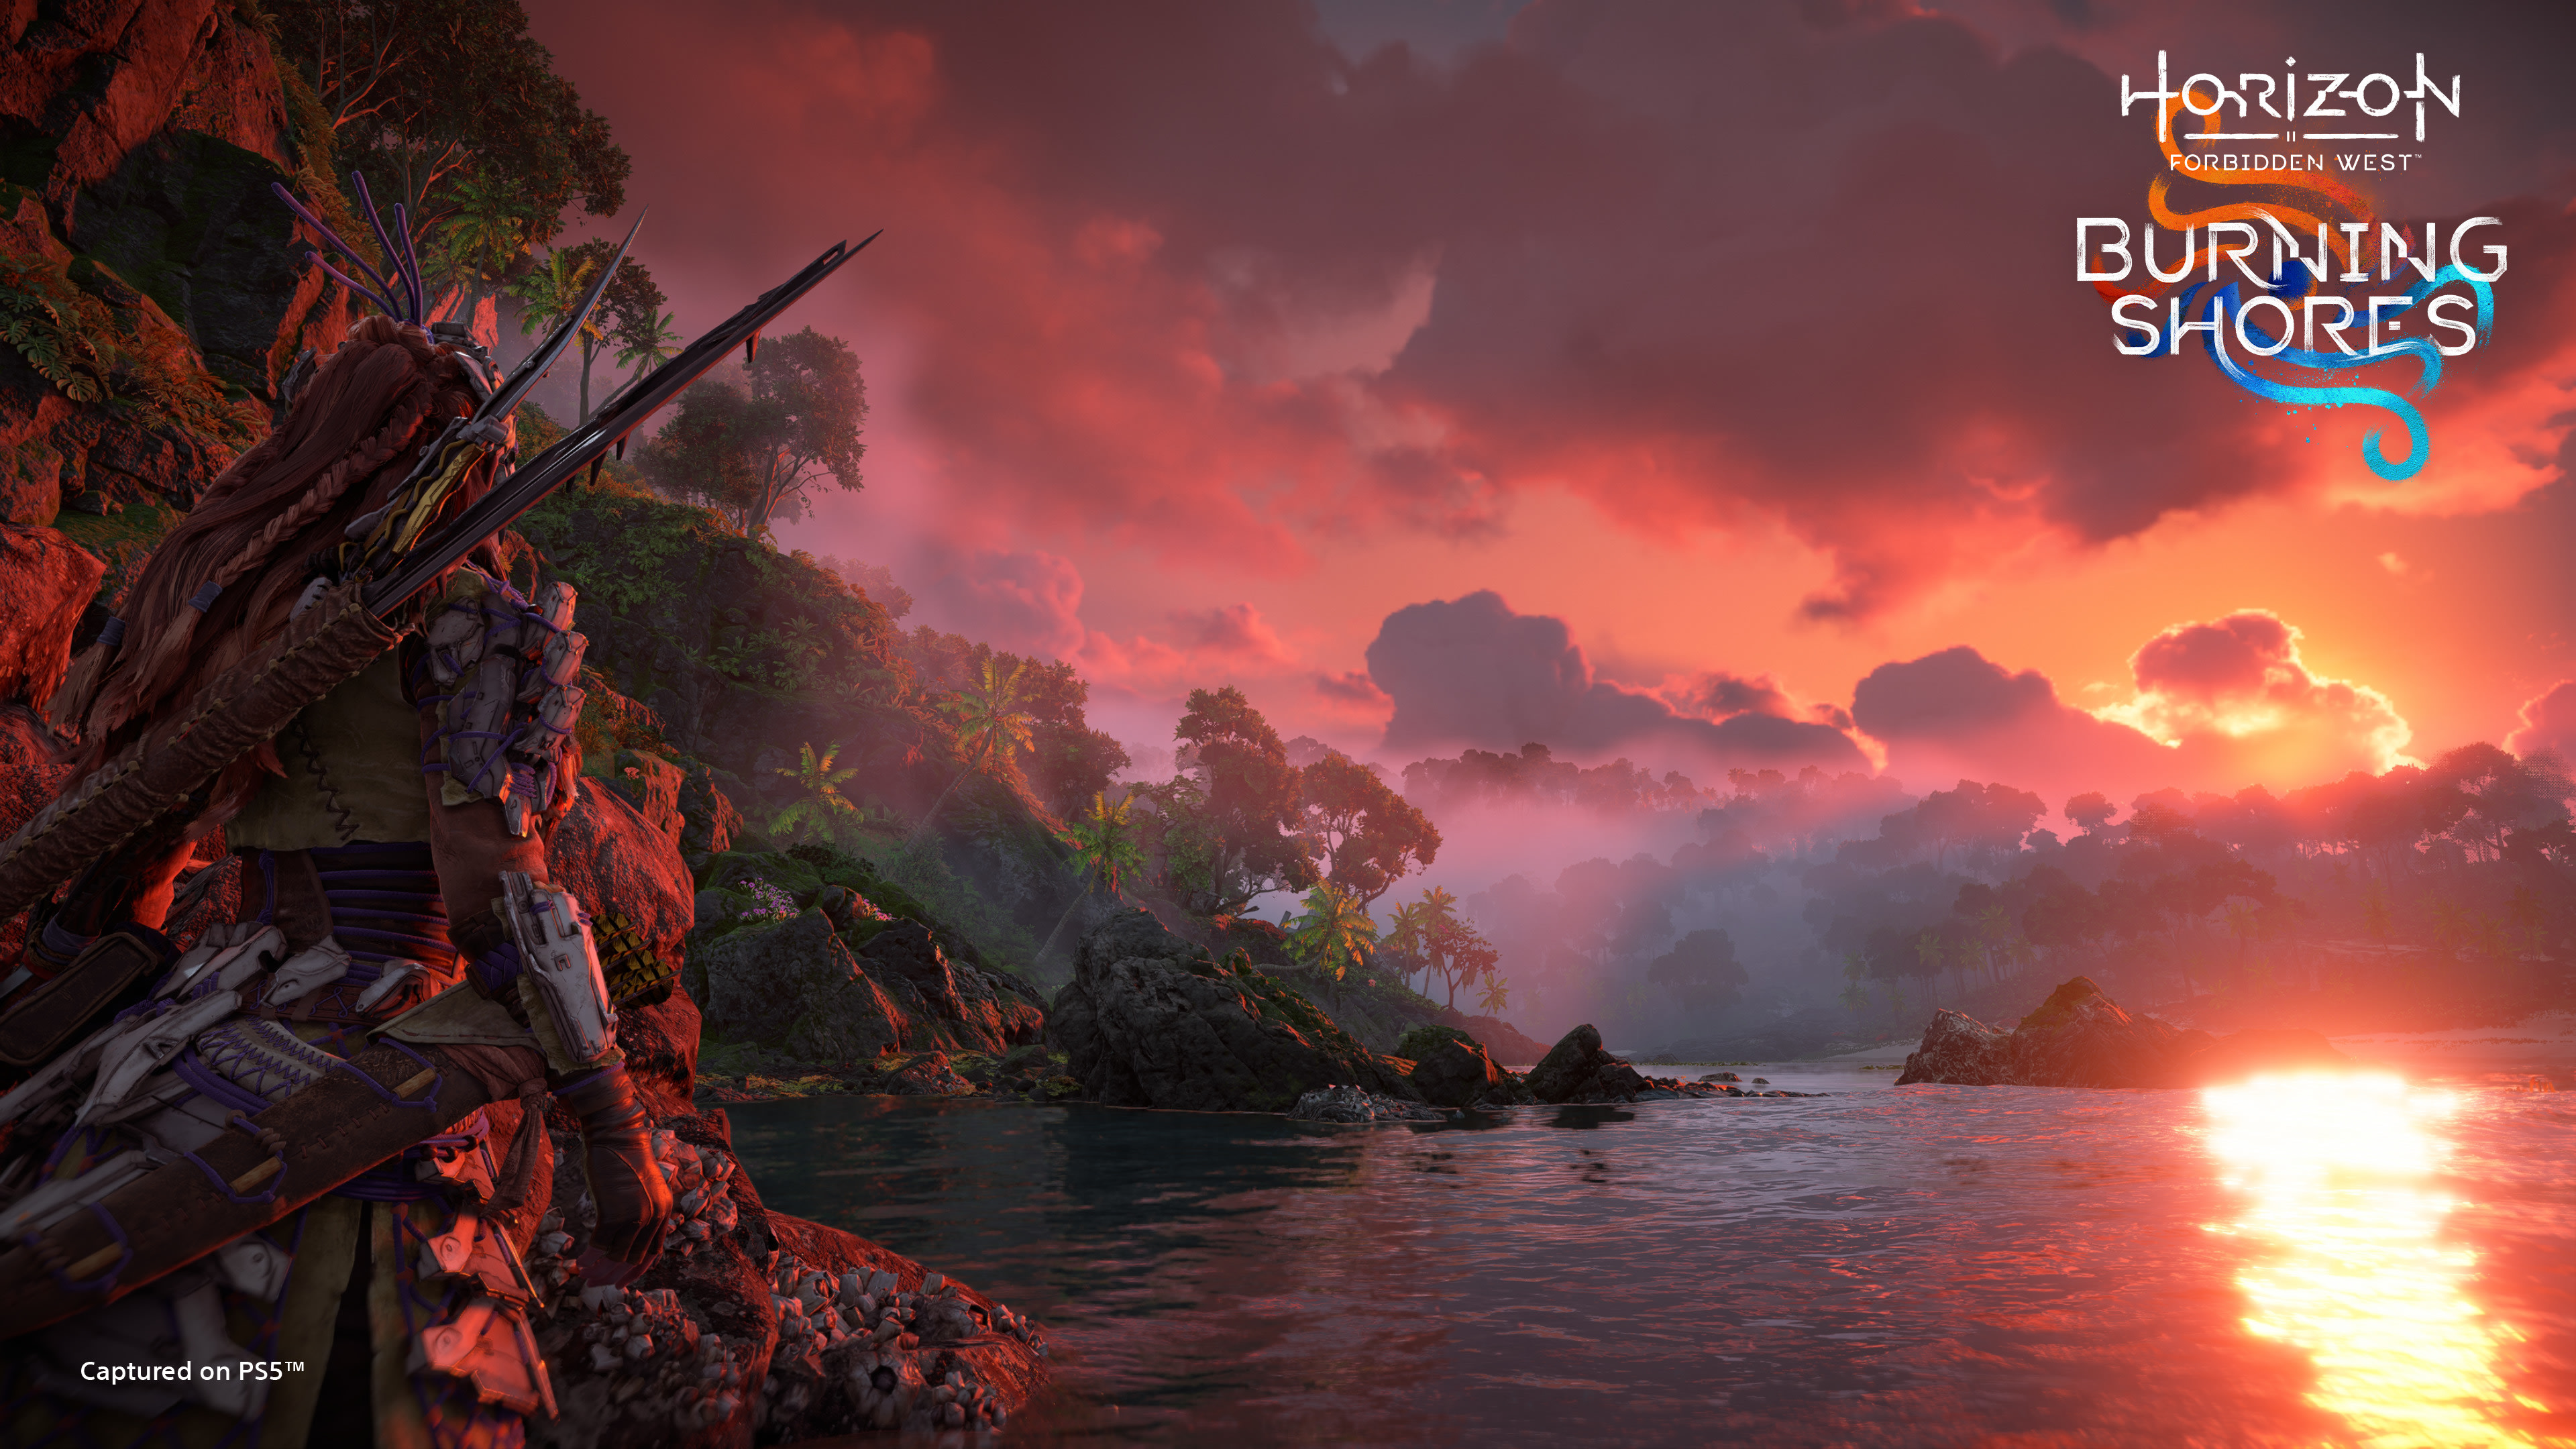 Video Game Horizon Forbidden West HD Wallpaper | Background Image